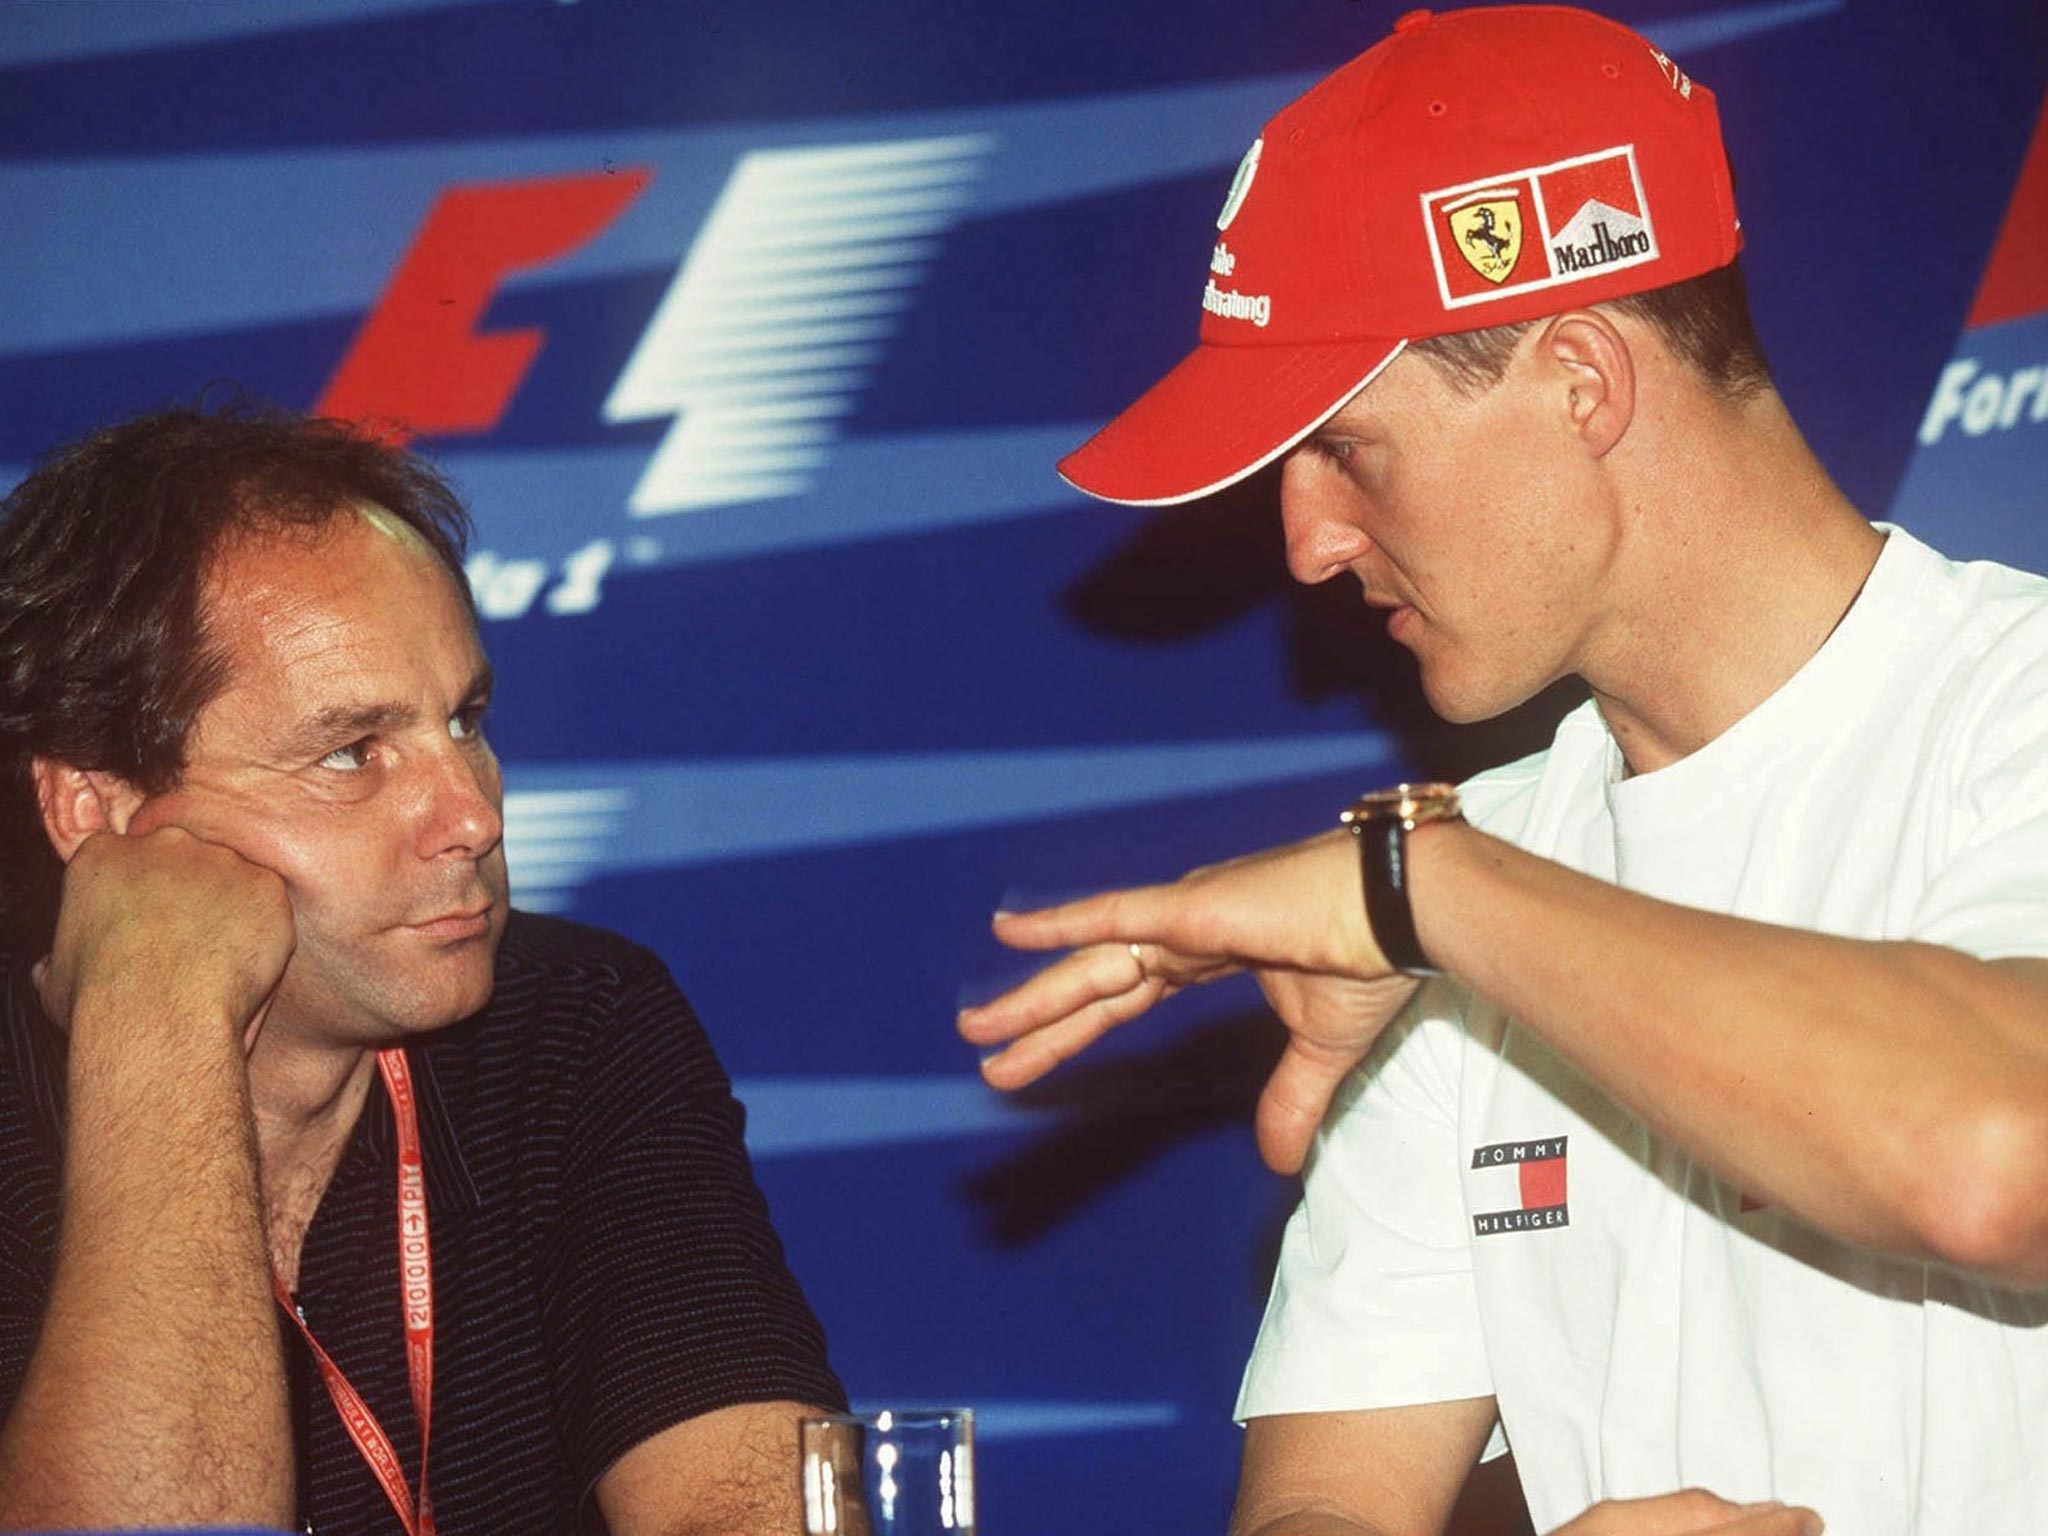 Gerhard Berger and Michael Schumacher in deep conversation during the 2000 Monaco Grand Prix